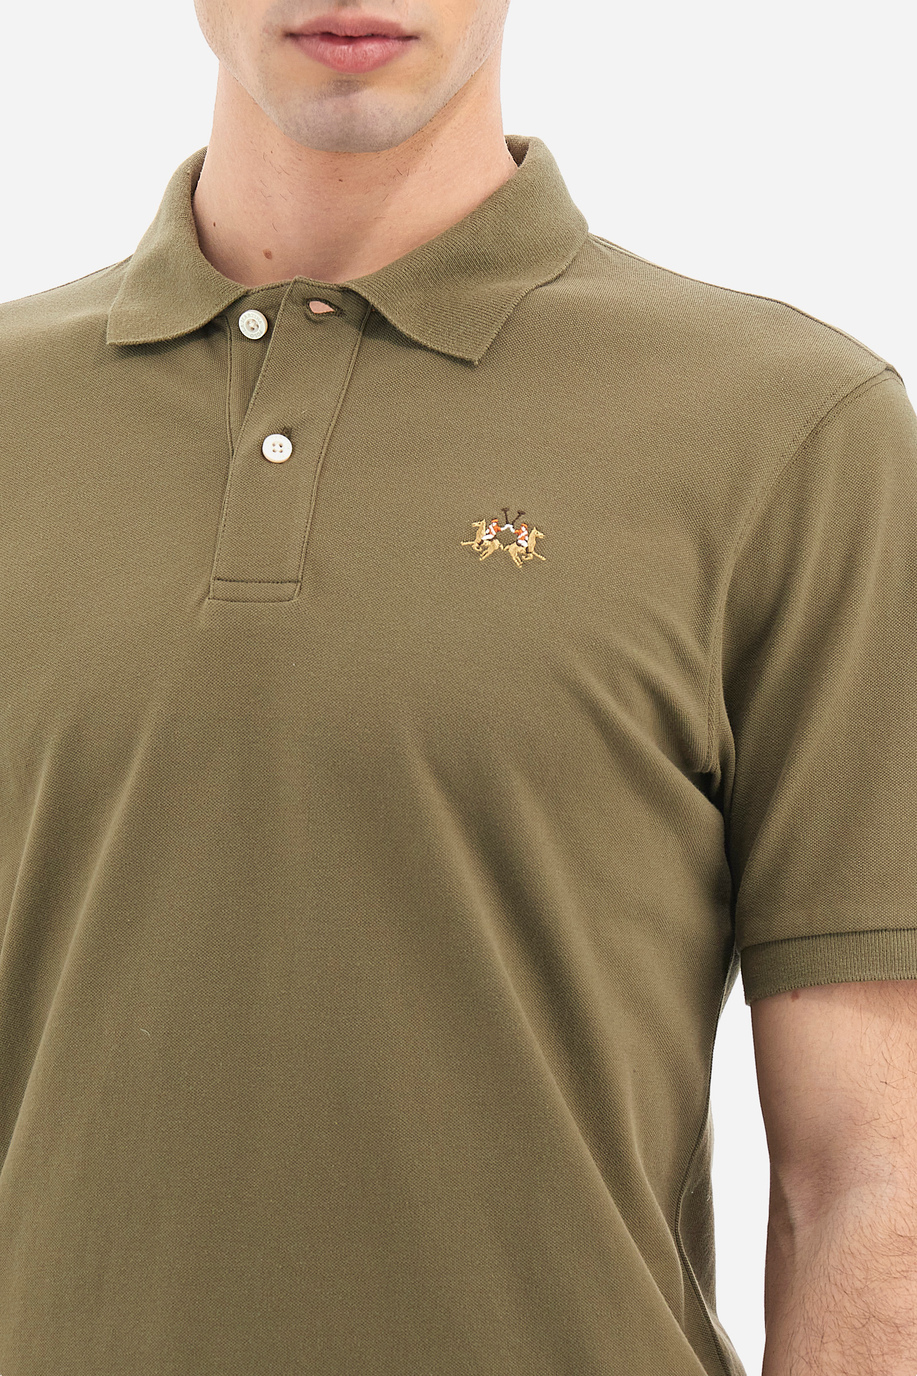 Kurzärmliges Herren-Poloshirt aus Stretch-Baumwolle slim fit  -  Eduardo - Poloshirts | La Martina - Official Online Shop